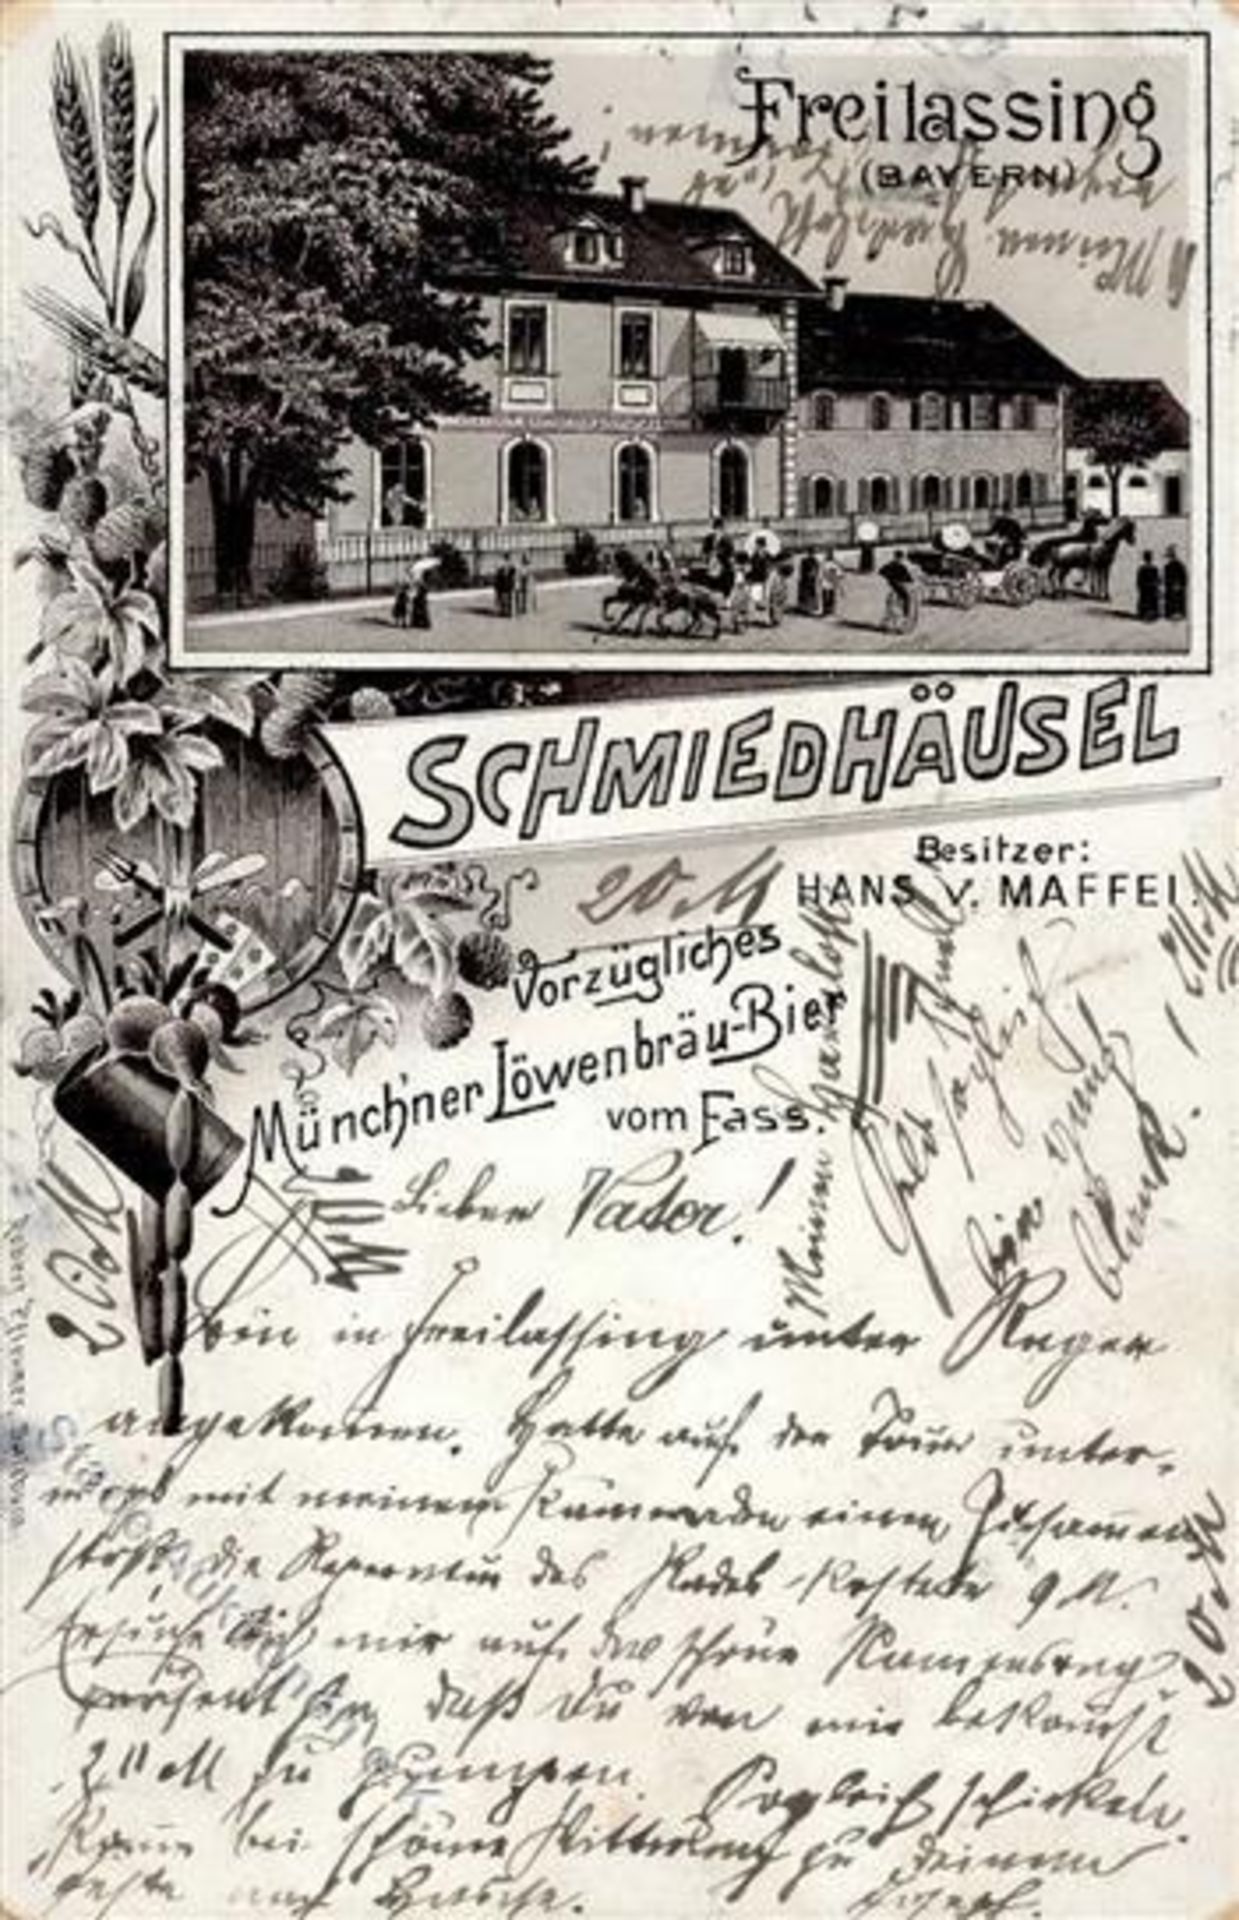 Freilassing (8228) Gasthaus Schmiedhäusel Hand v. Maffei II (Stauchung, Marke entfernt,